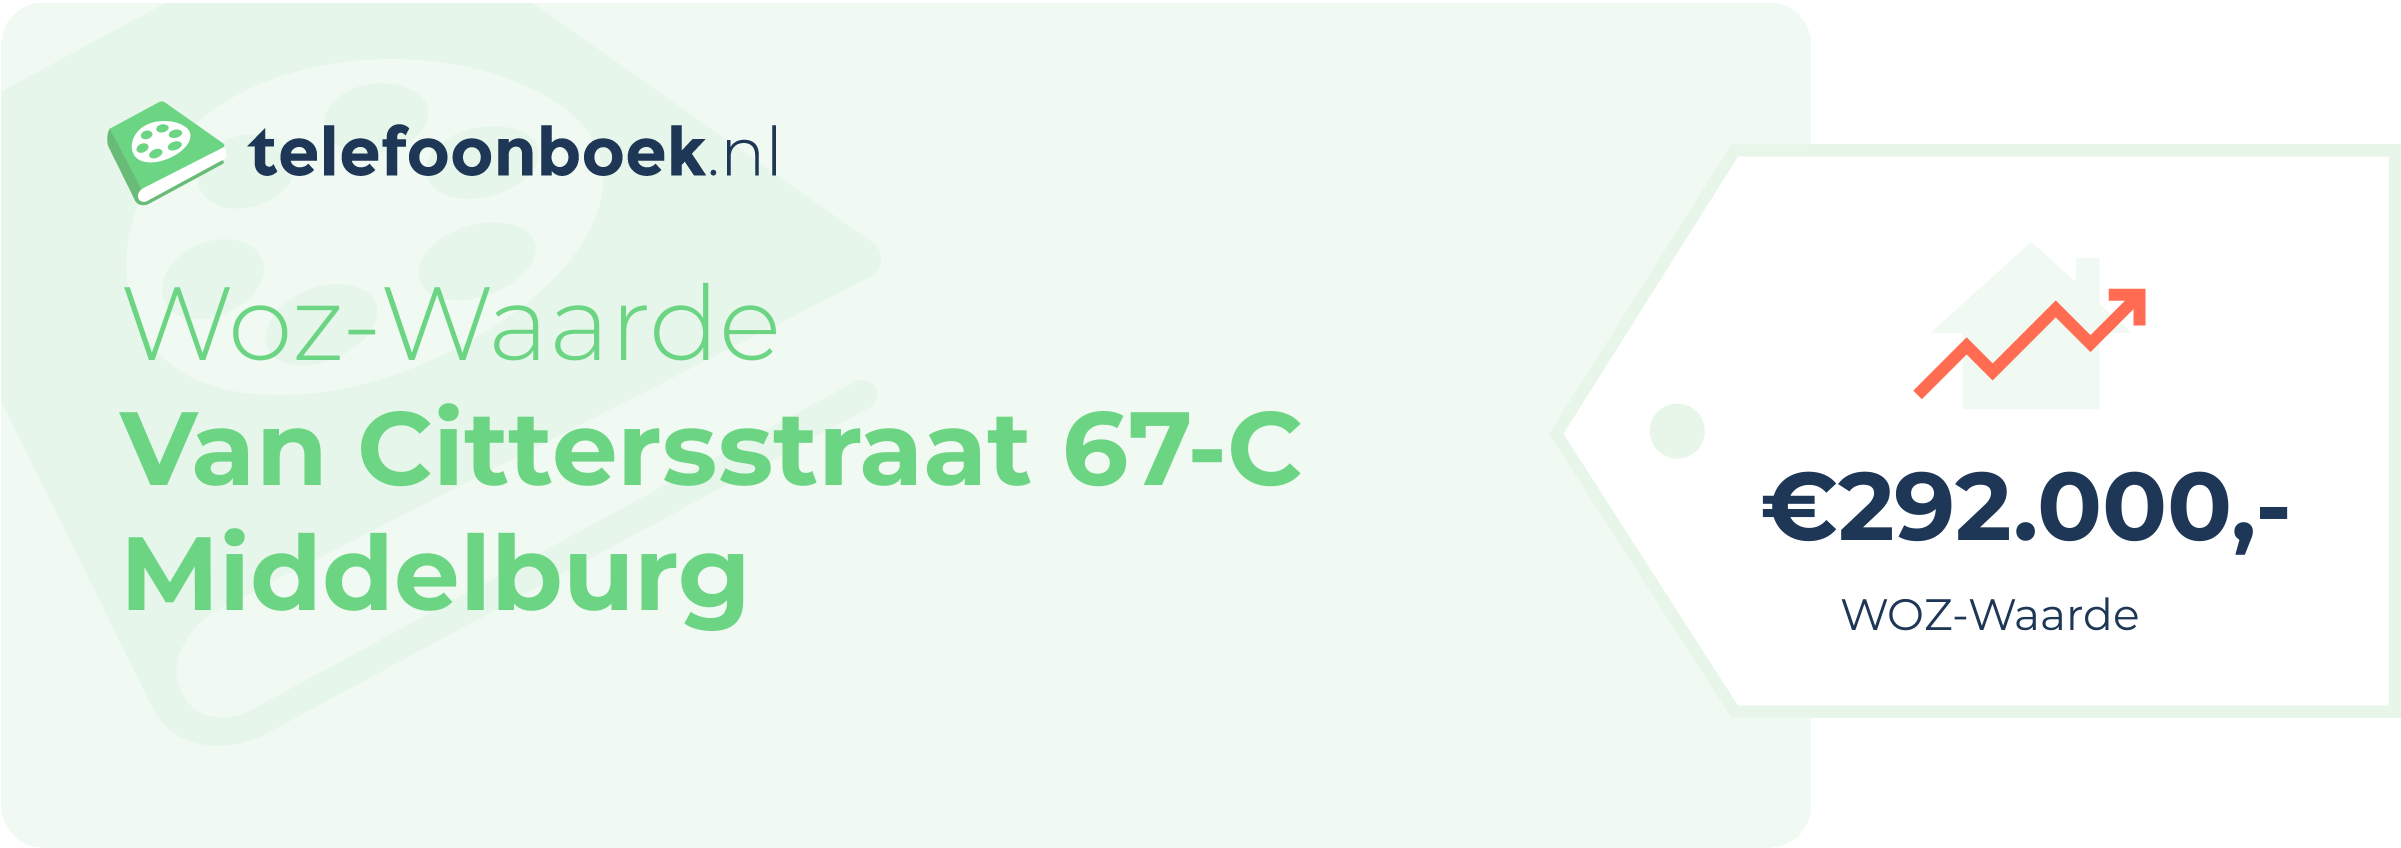 WOZ-waarde Van Cittersstraat 67-C Middelburg